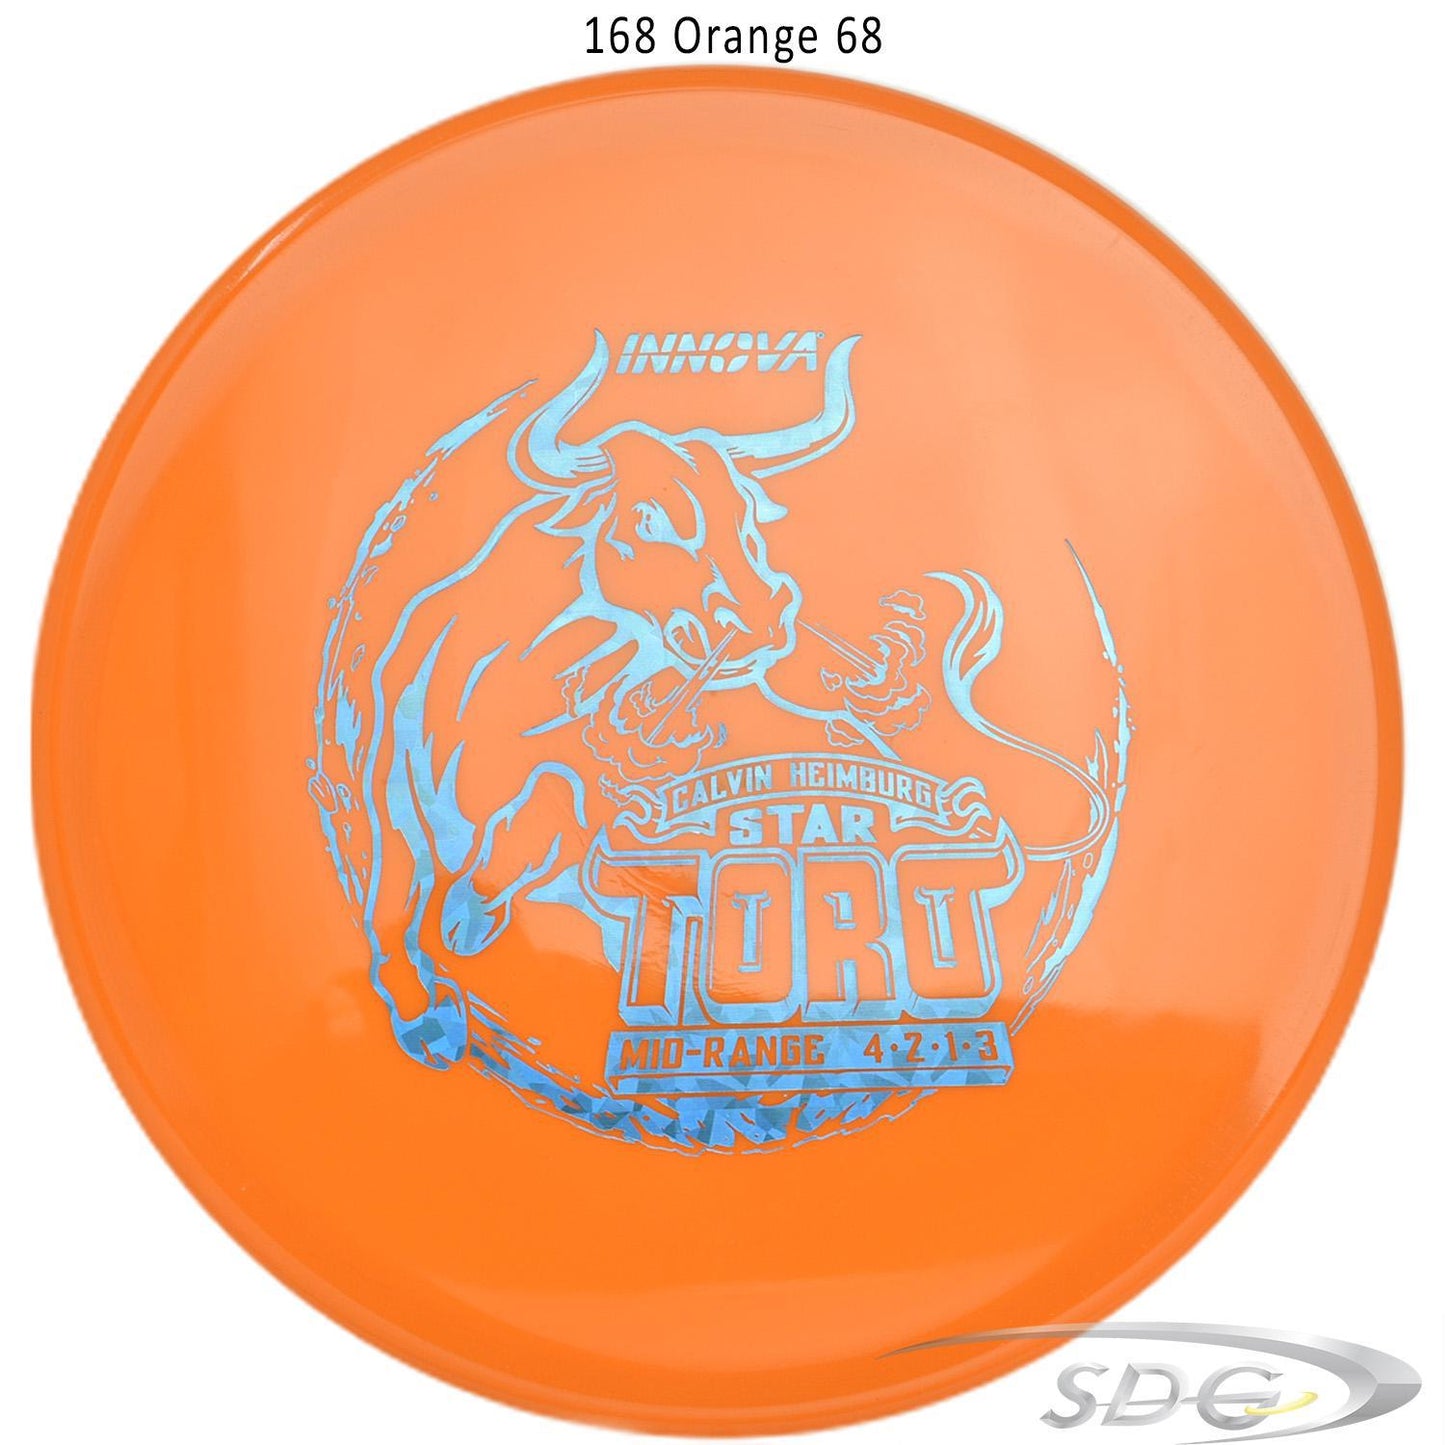 innova-star-toro-calvin-heimburg-signature-disc-golf-mid-range 168 Orange 68 